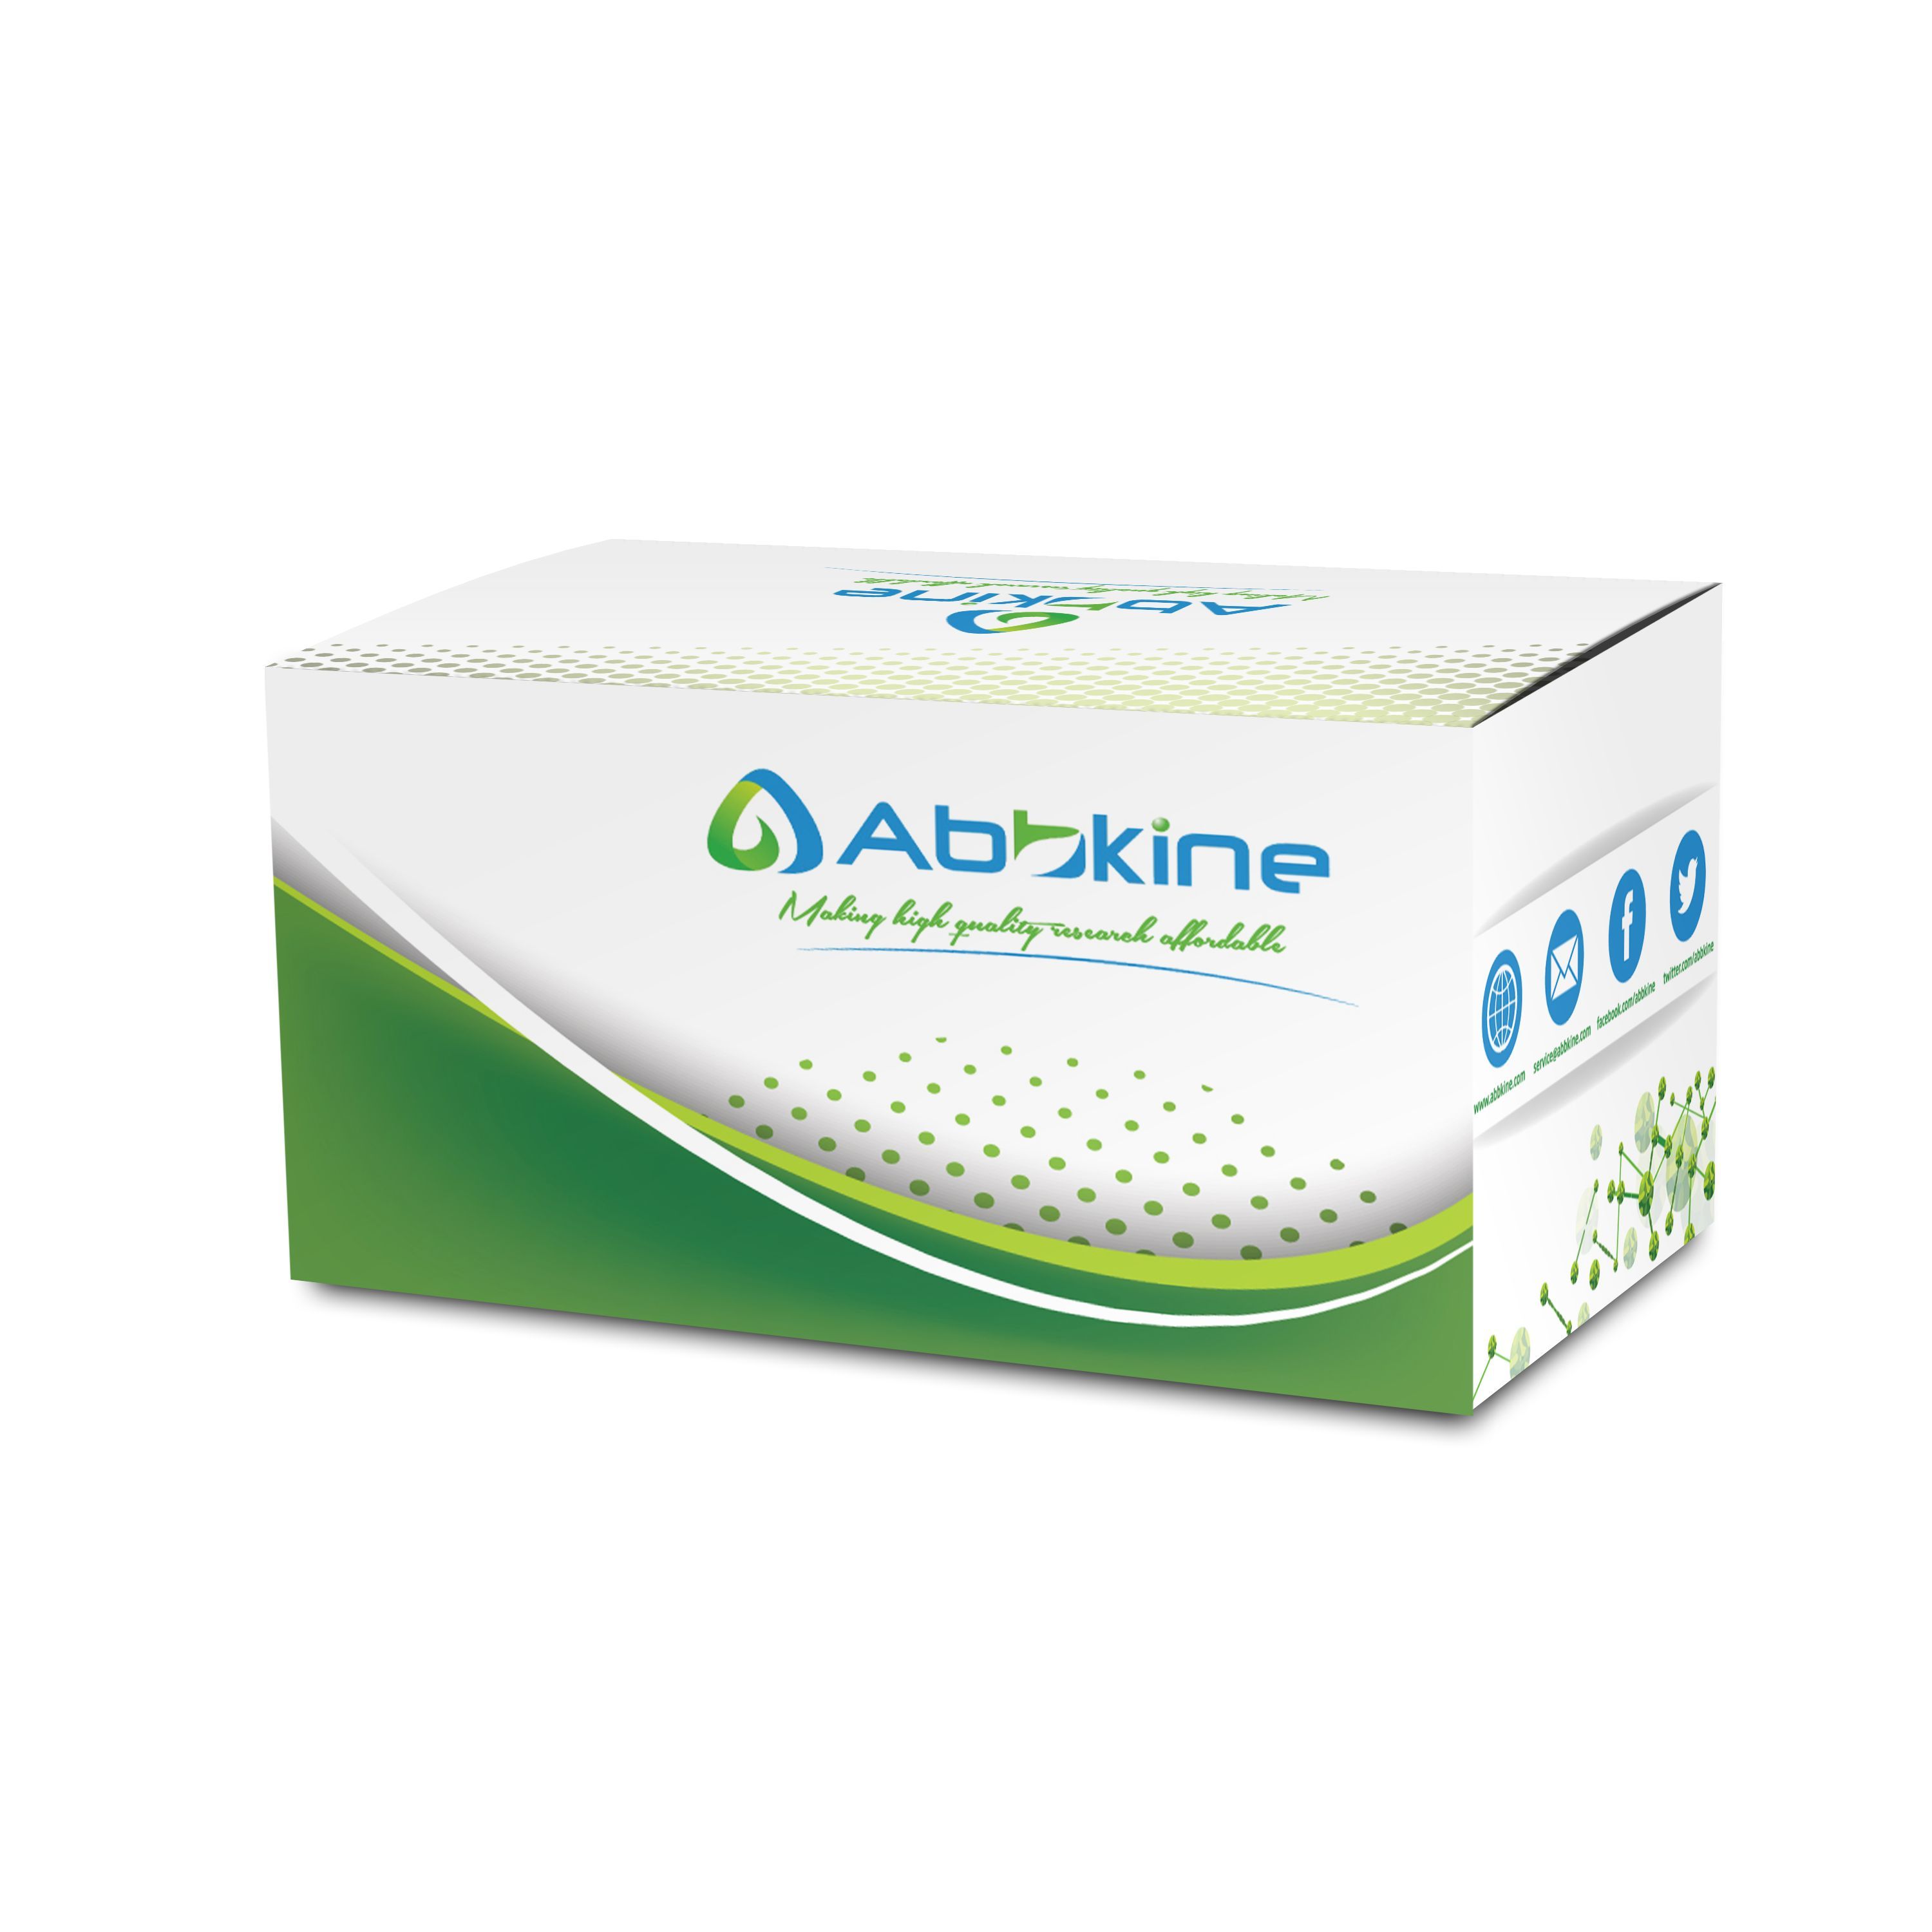 ExKine™ 总蛋白提取试剂盒/ExKine™ 总蛋白提取试剂盒